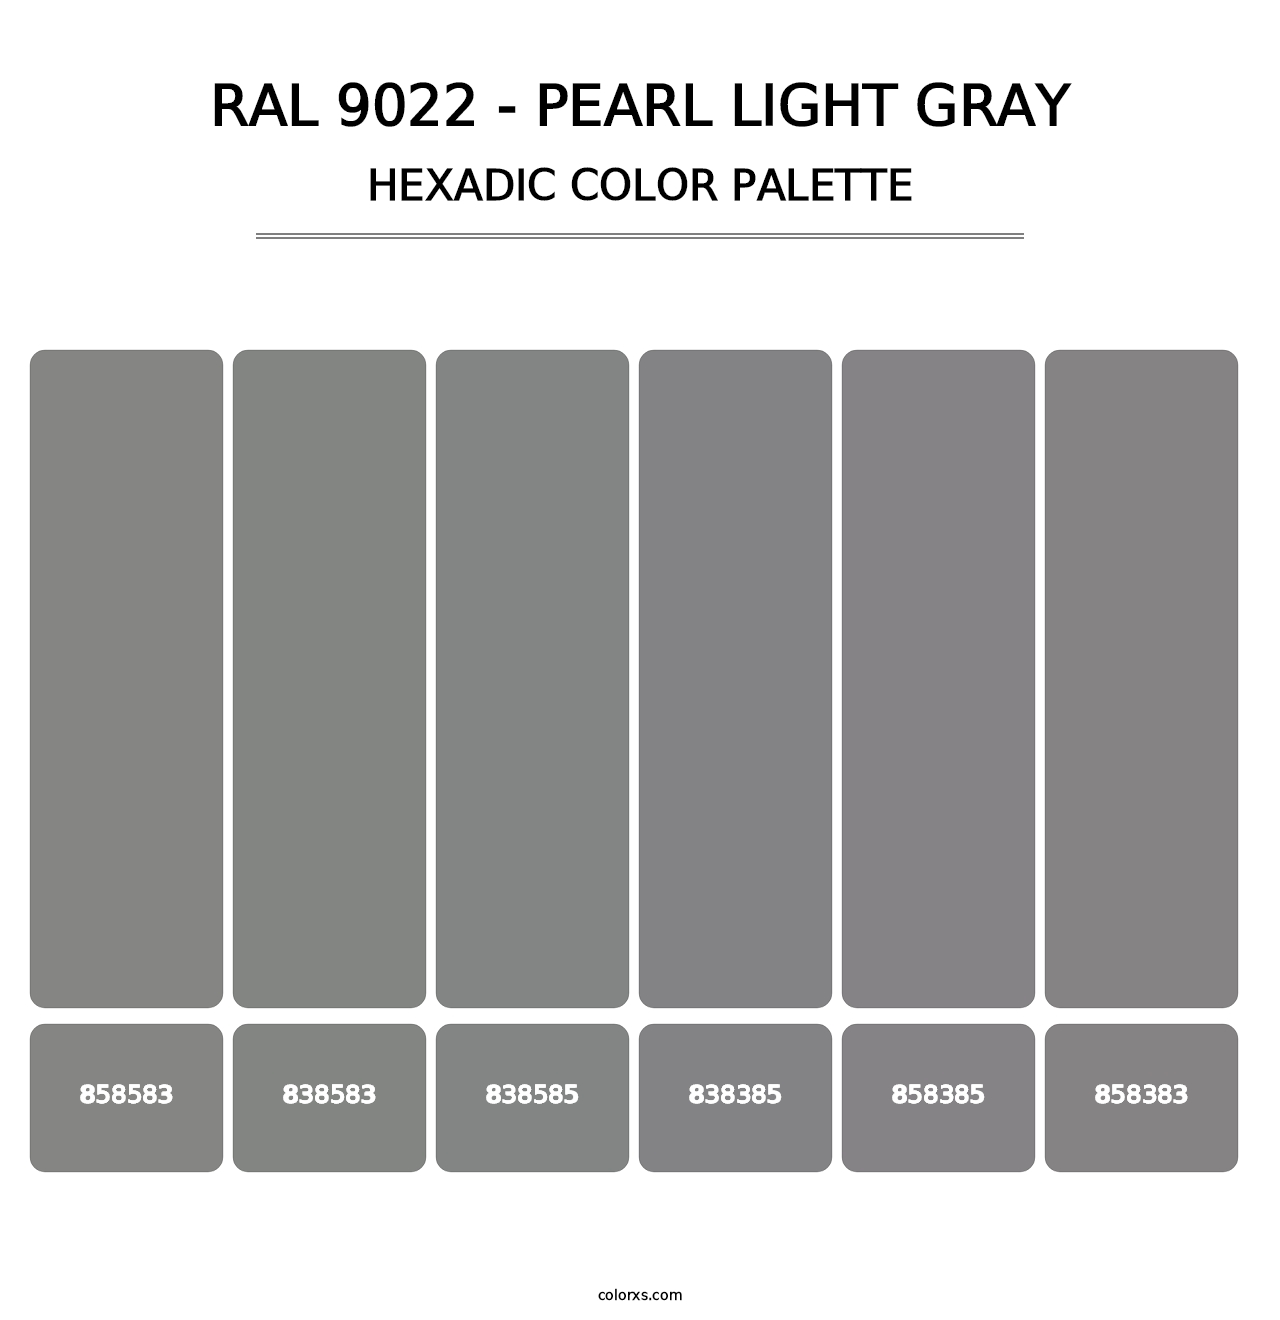 RAL 9022 - Pearl Light Gray - Hexadic Color Palette